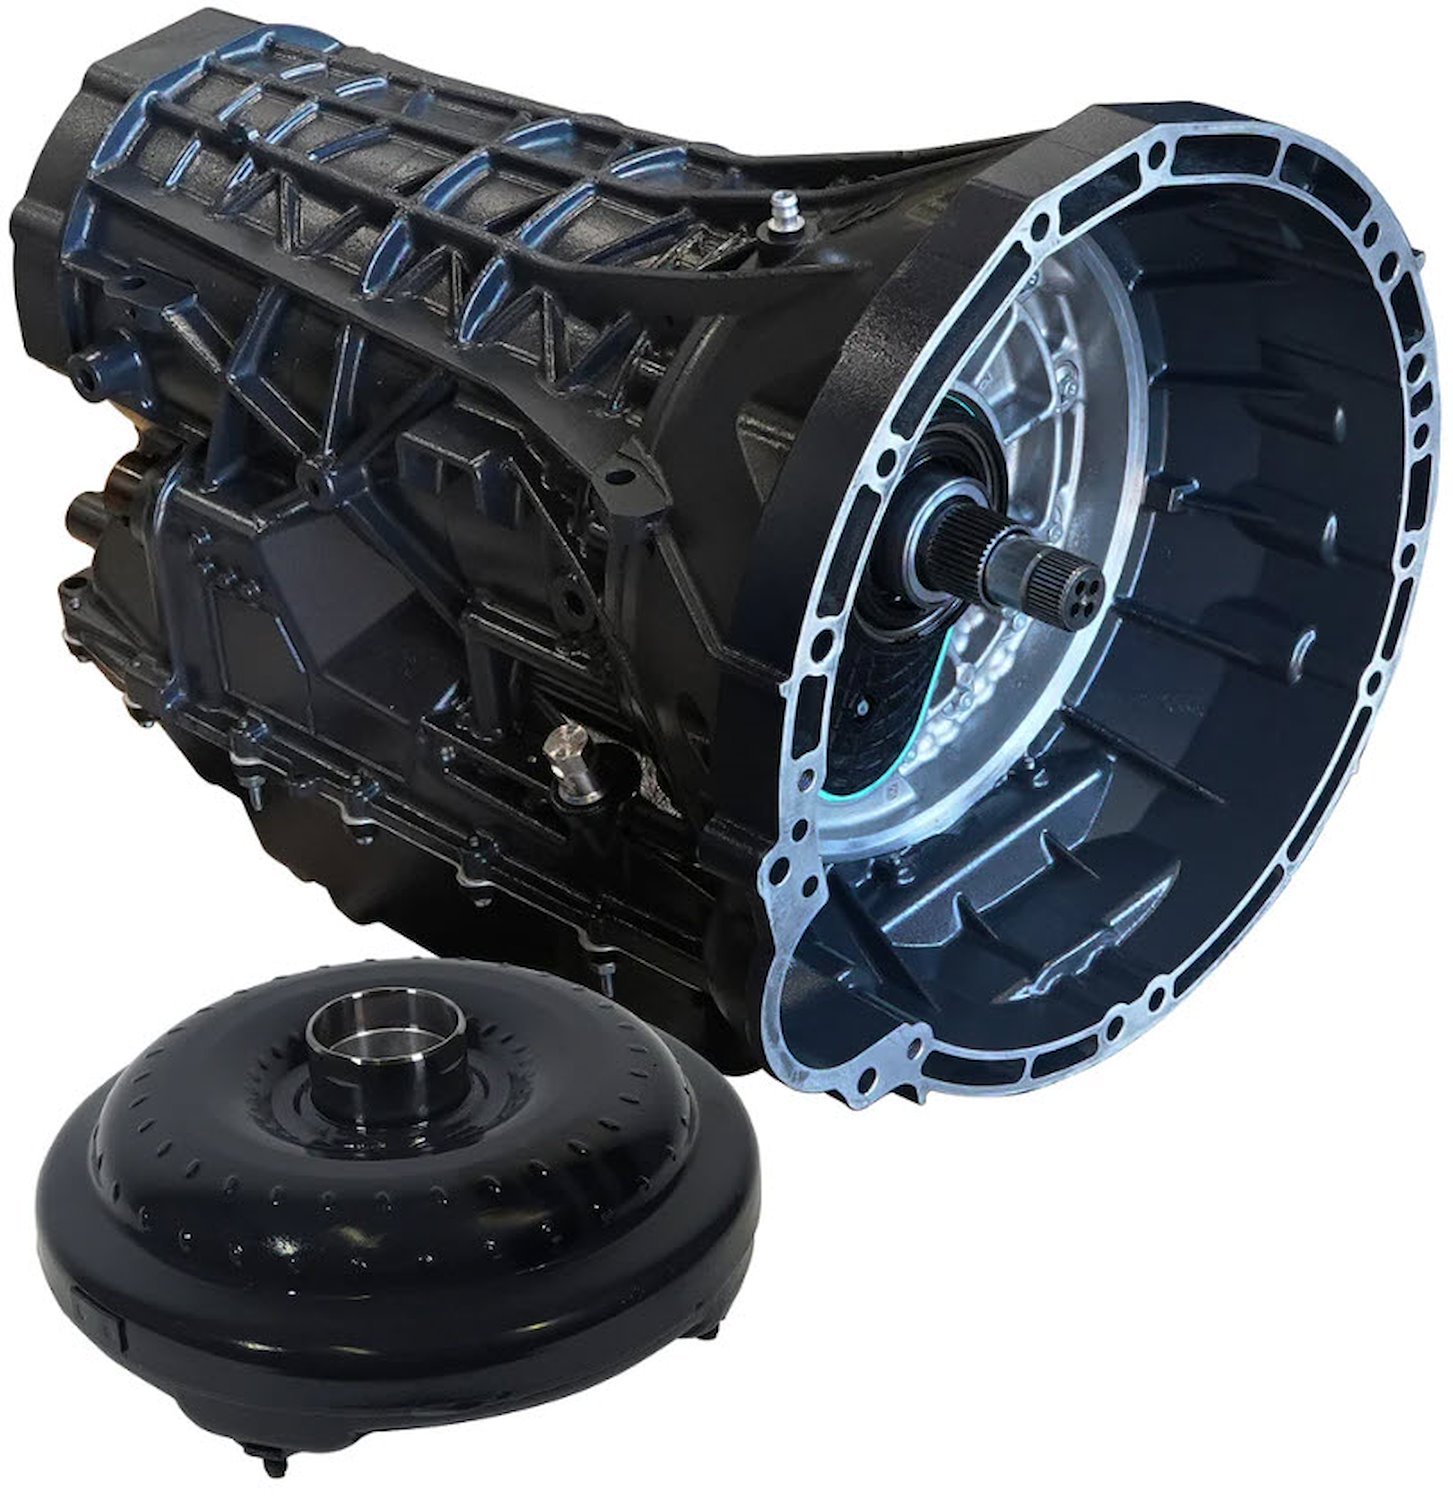 1064622SS RoadMaster 10R80 Transmission & Torque Converter for 2018-2020 Ford F-150 Trucks w/5.0L V8 Engine [2WD]